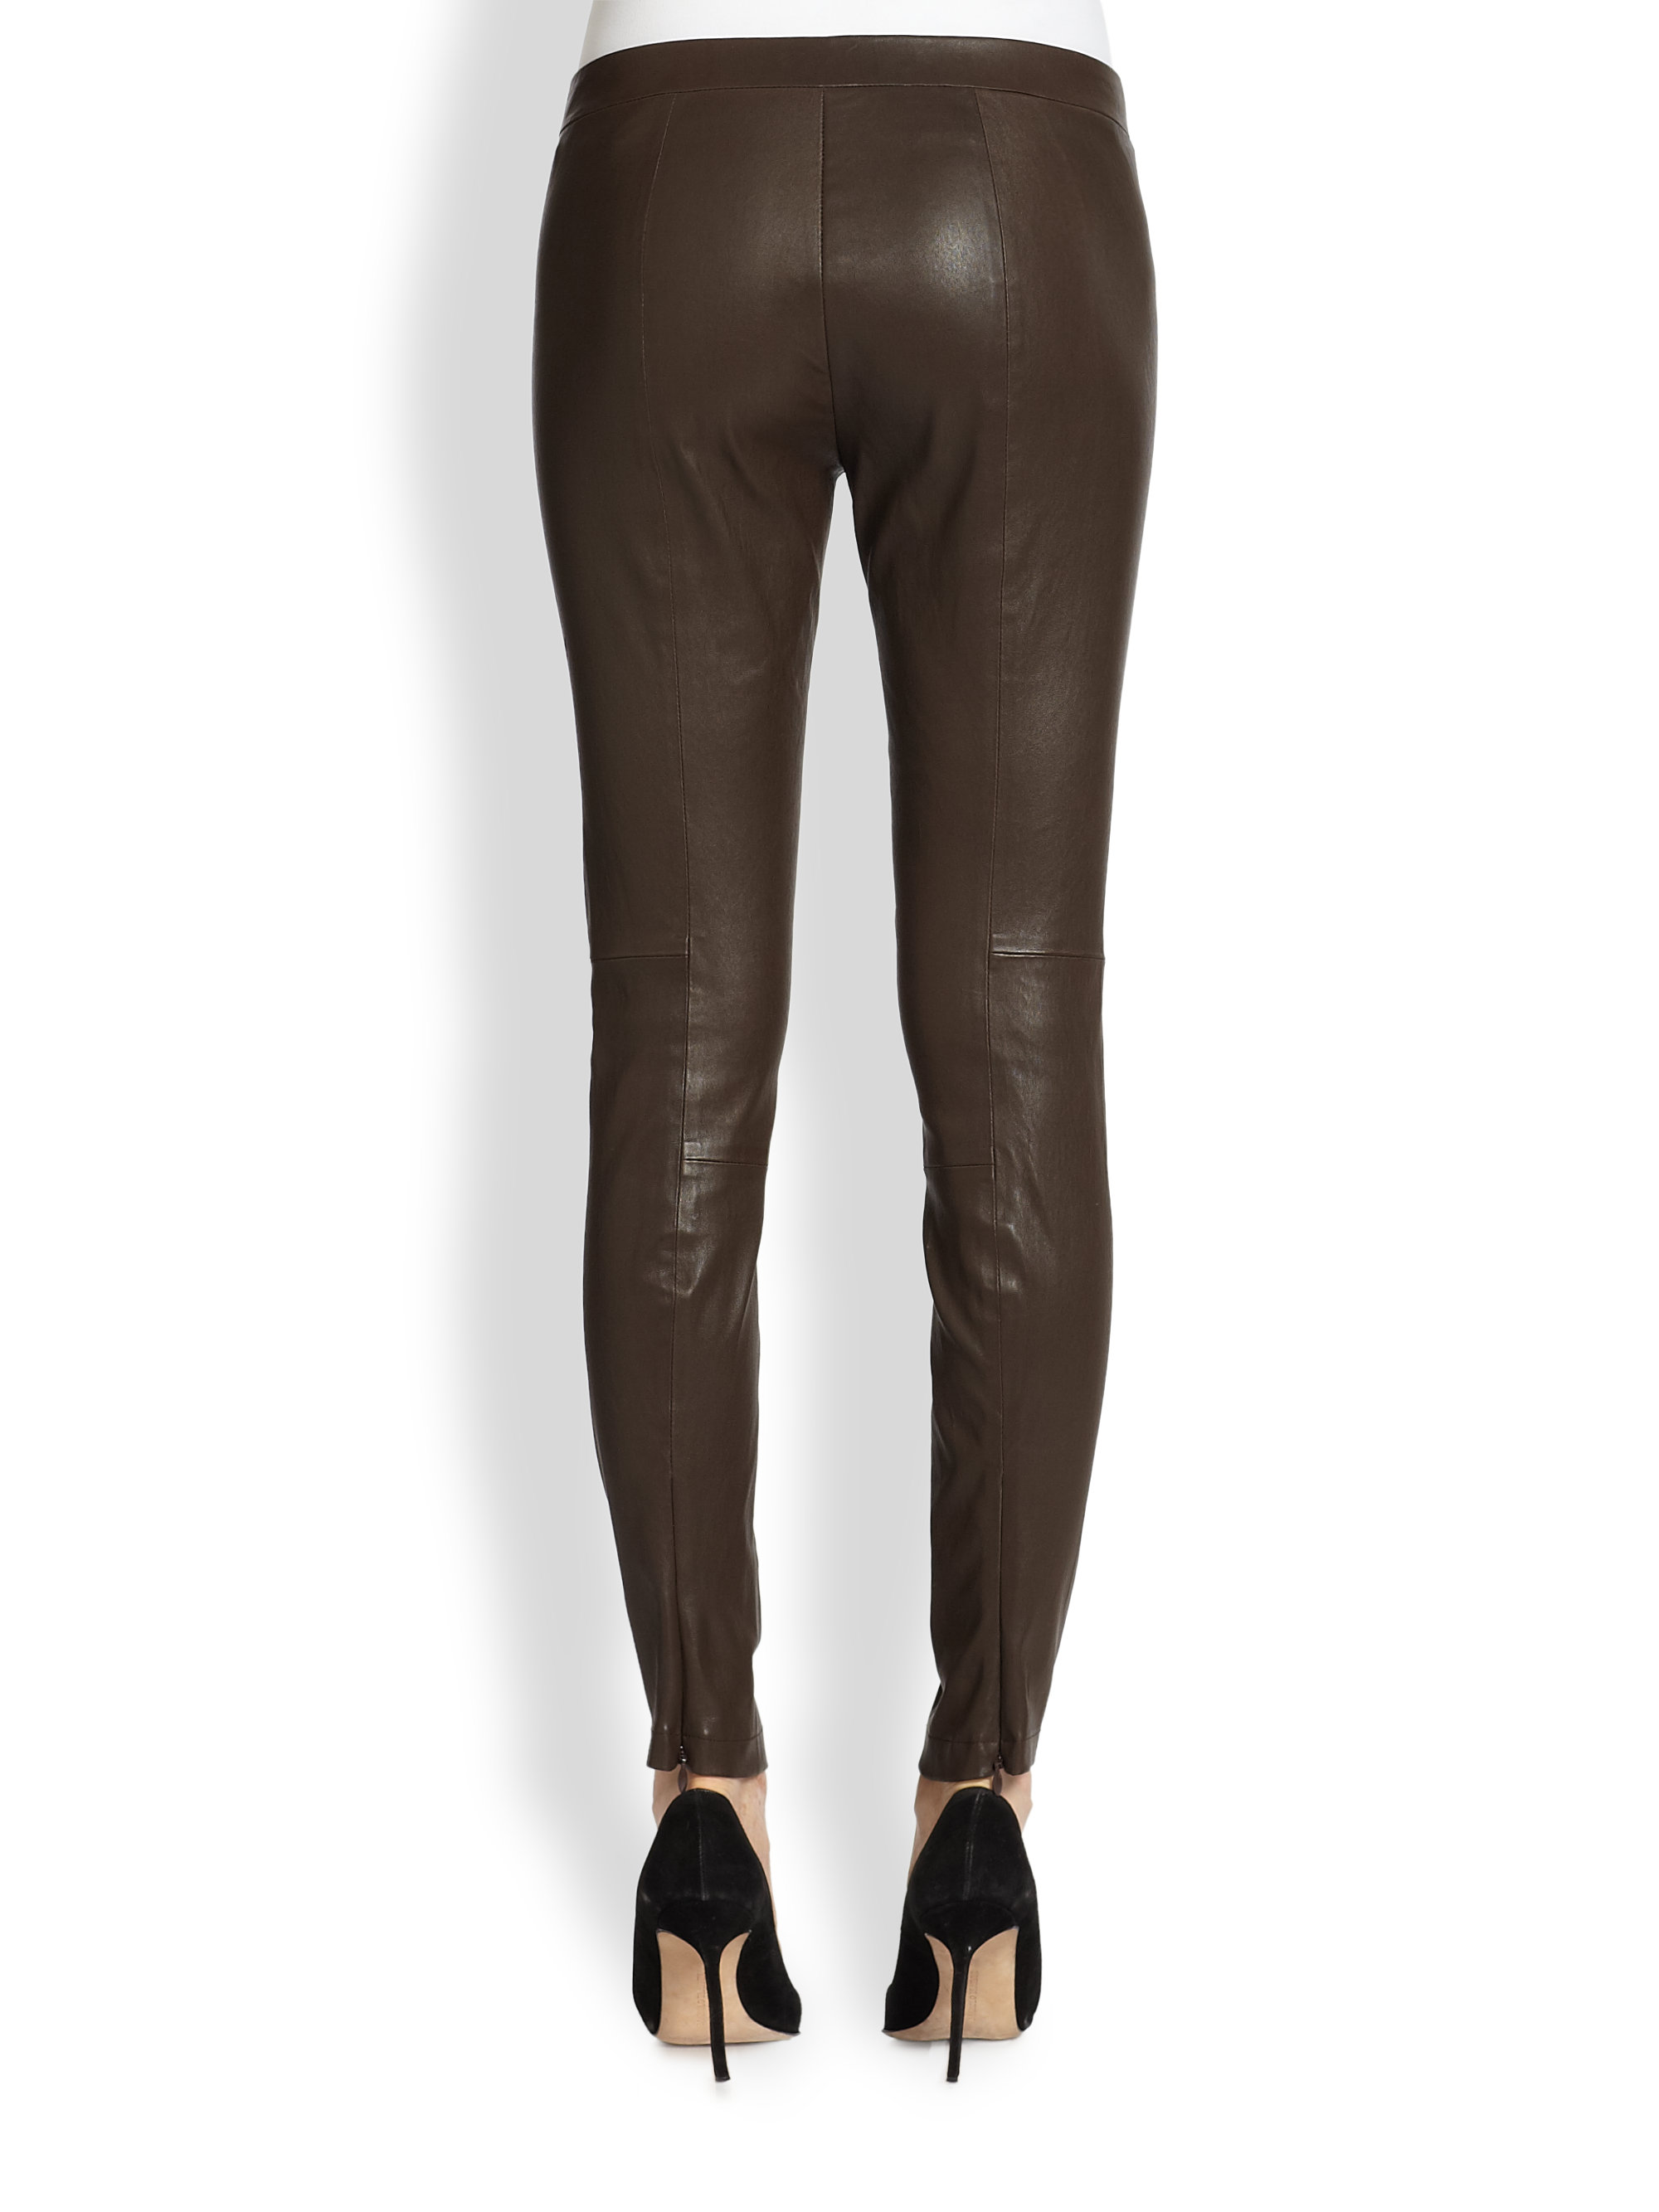 brown leather leggings for salem